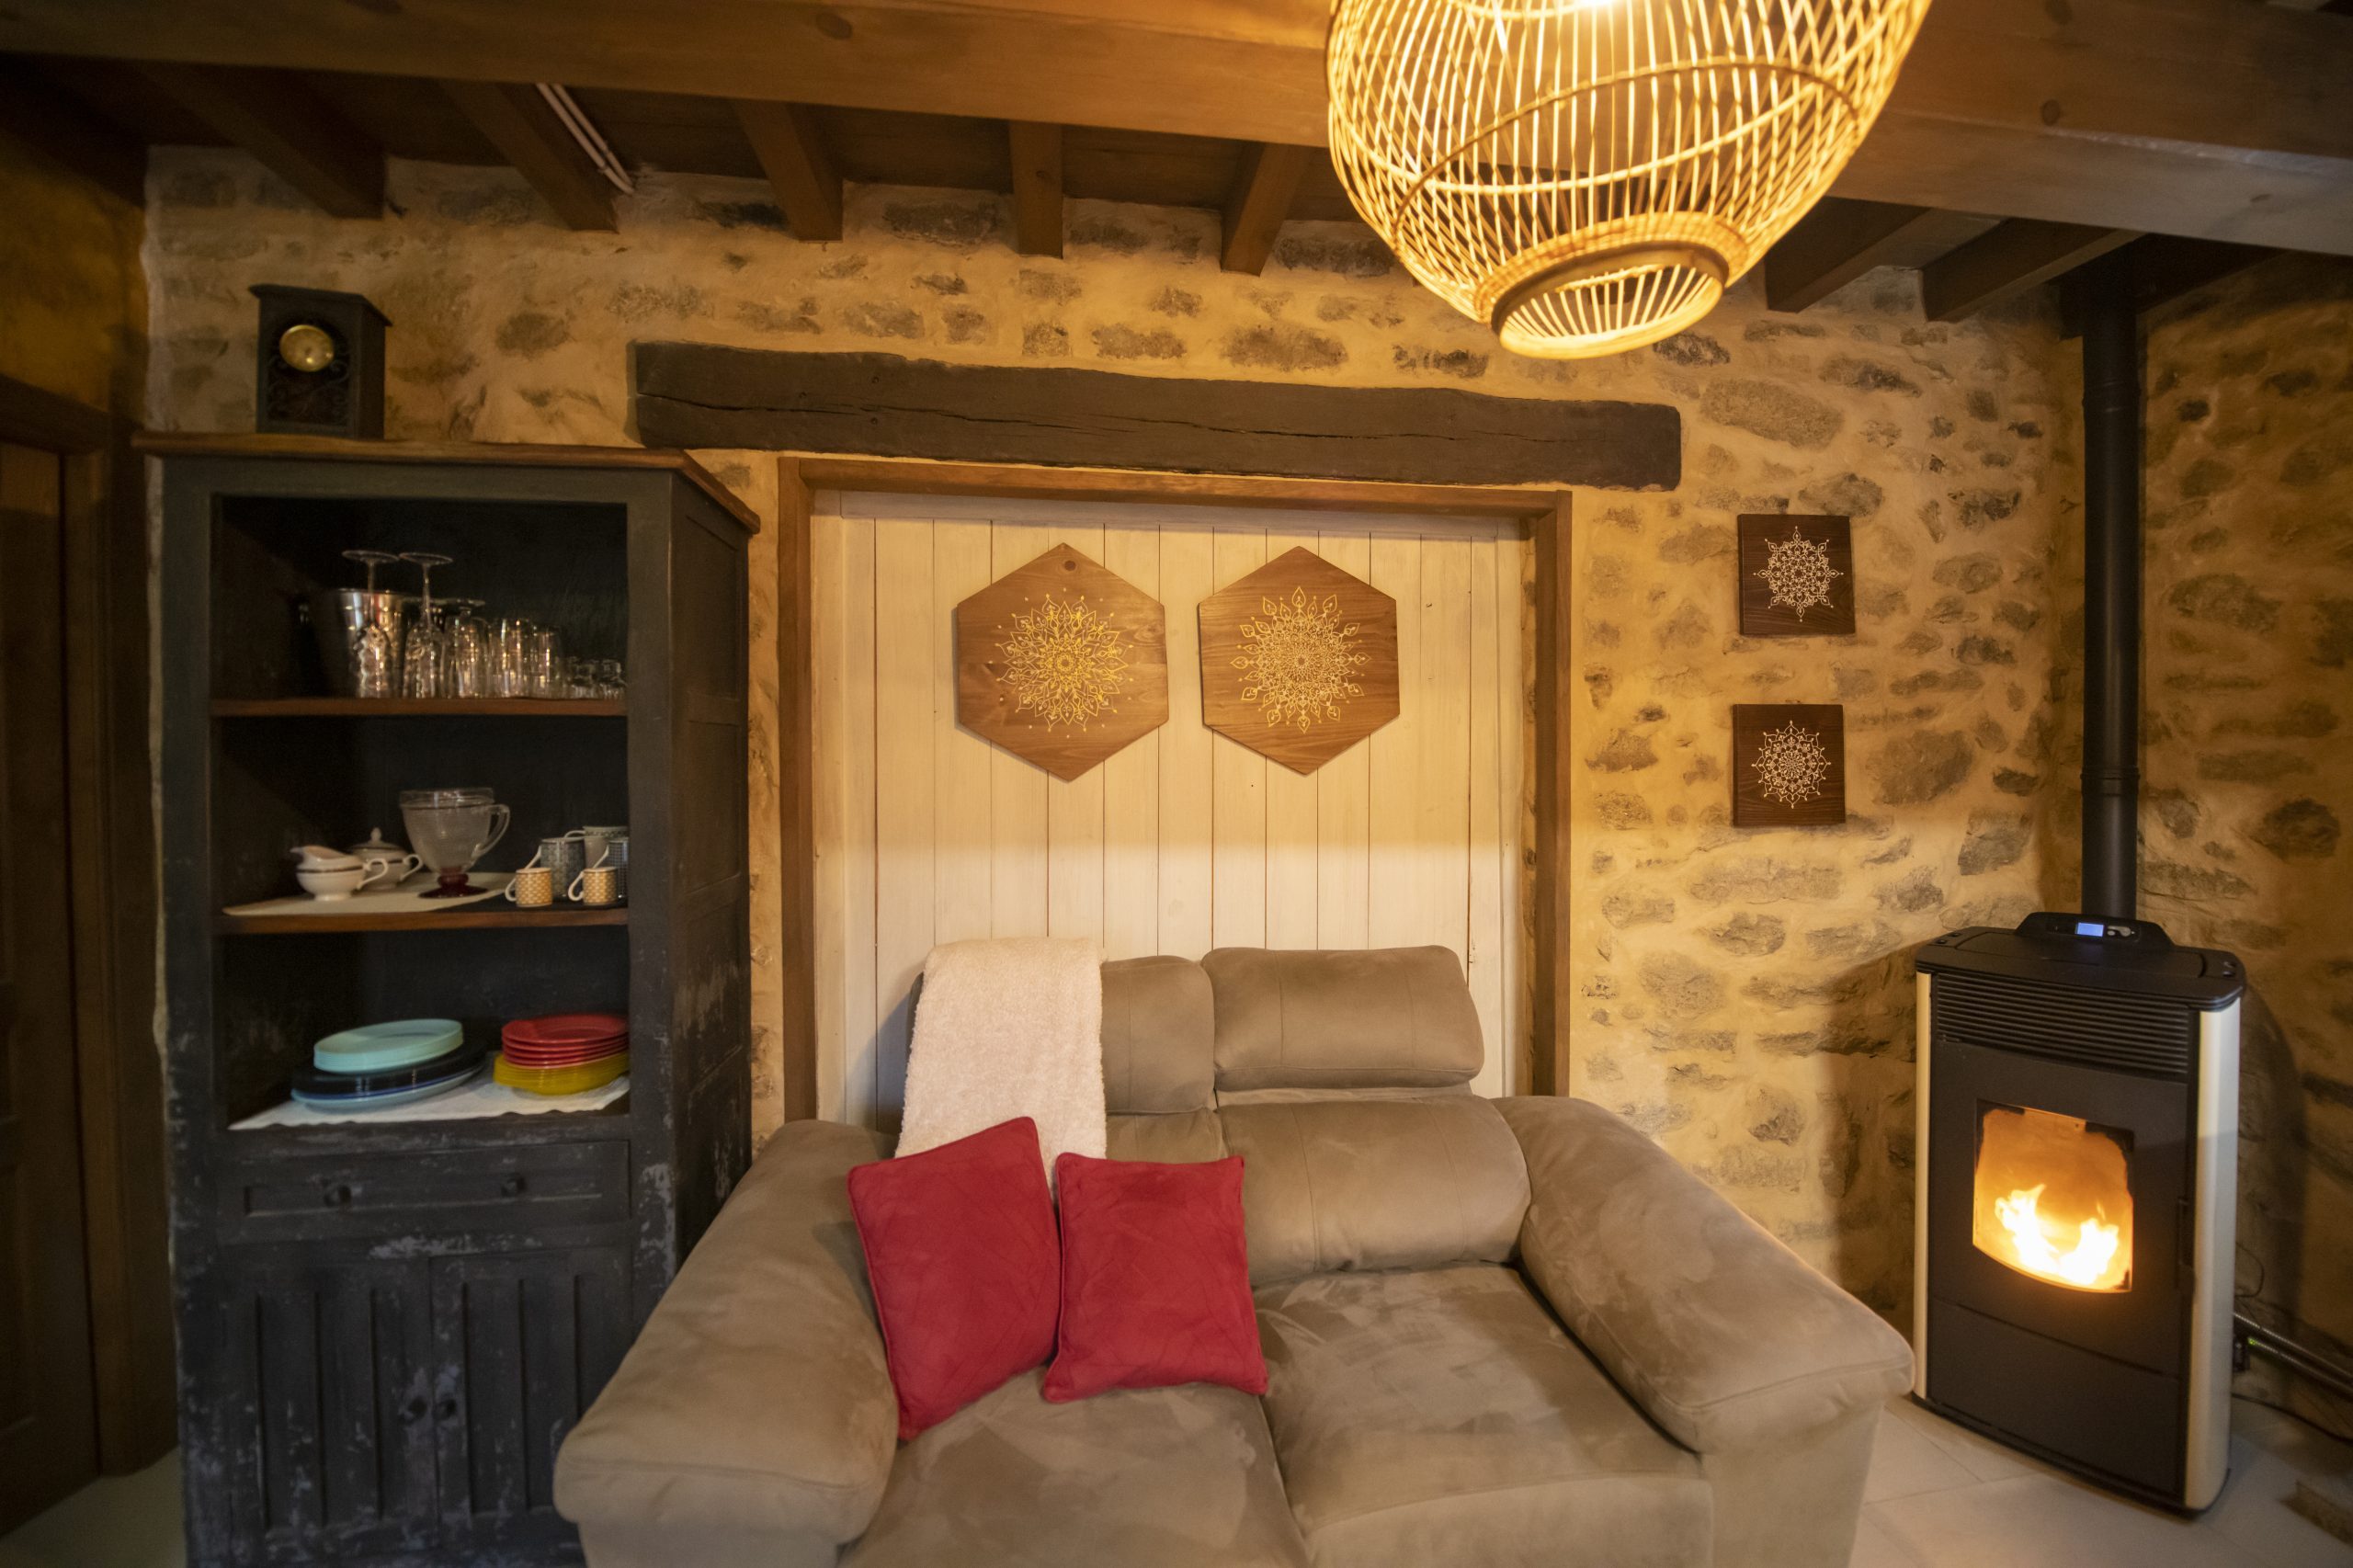 Casa rural para parejas romántica en Ávila